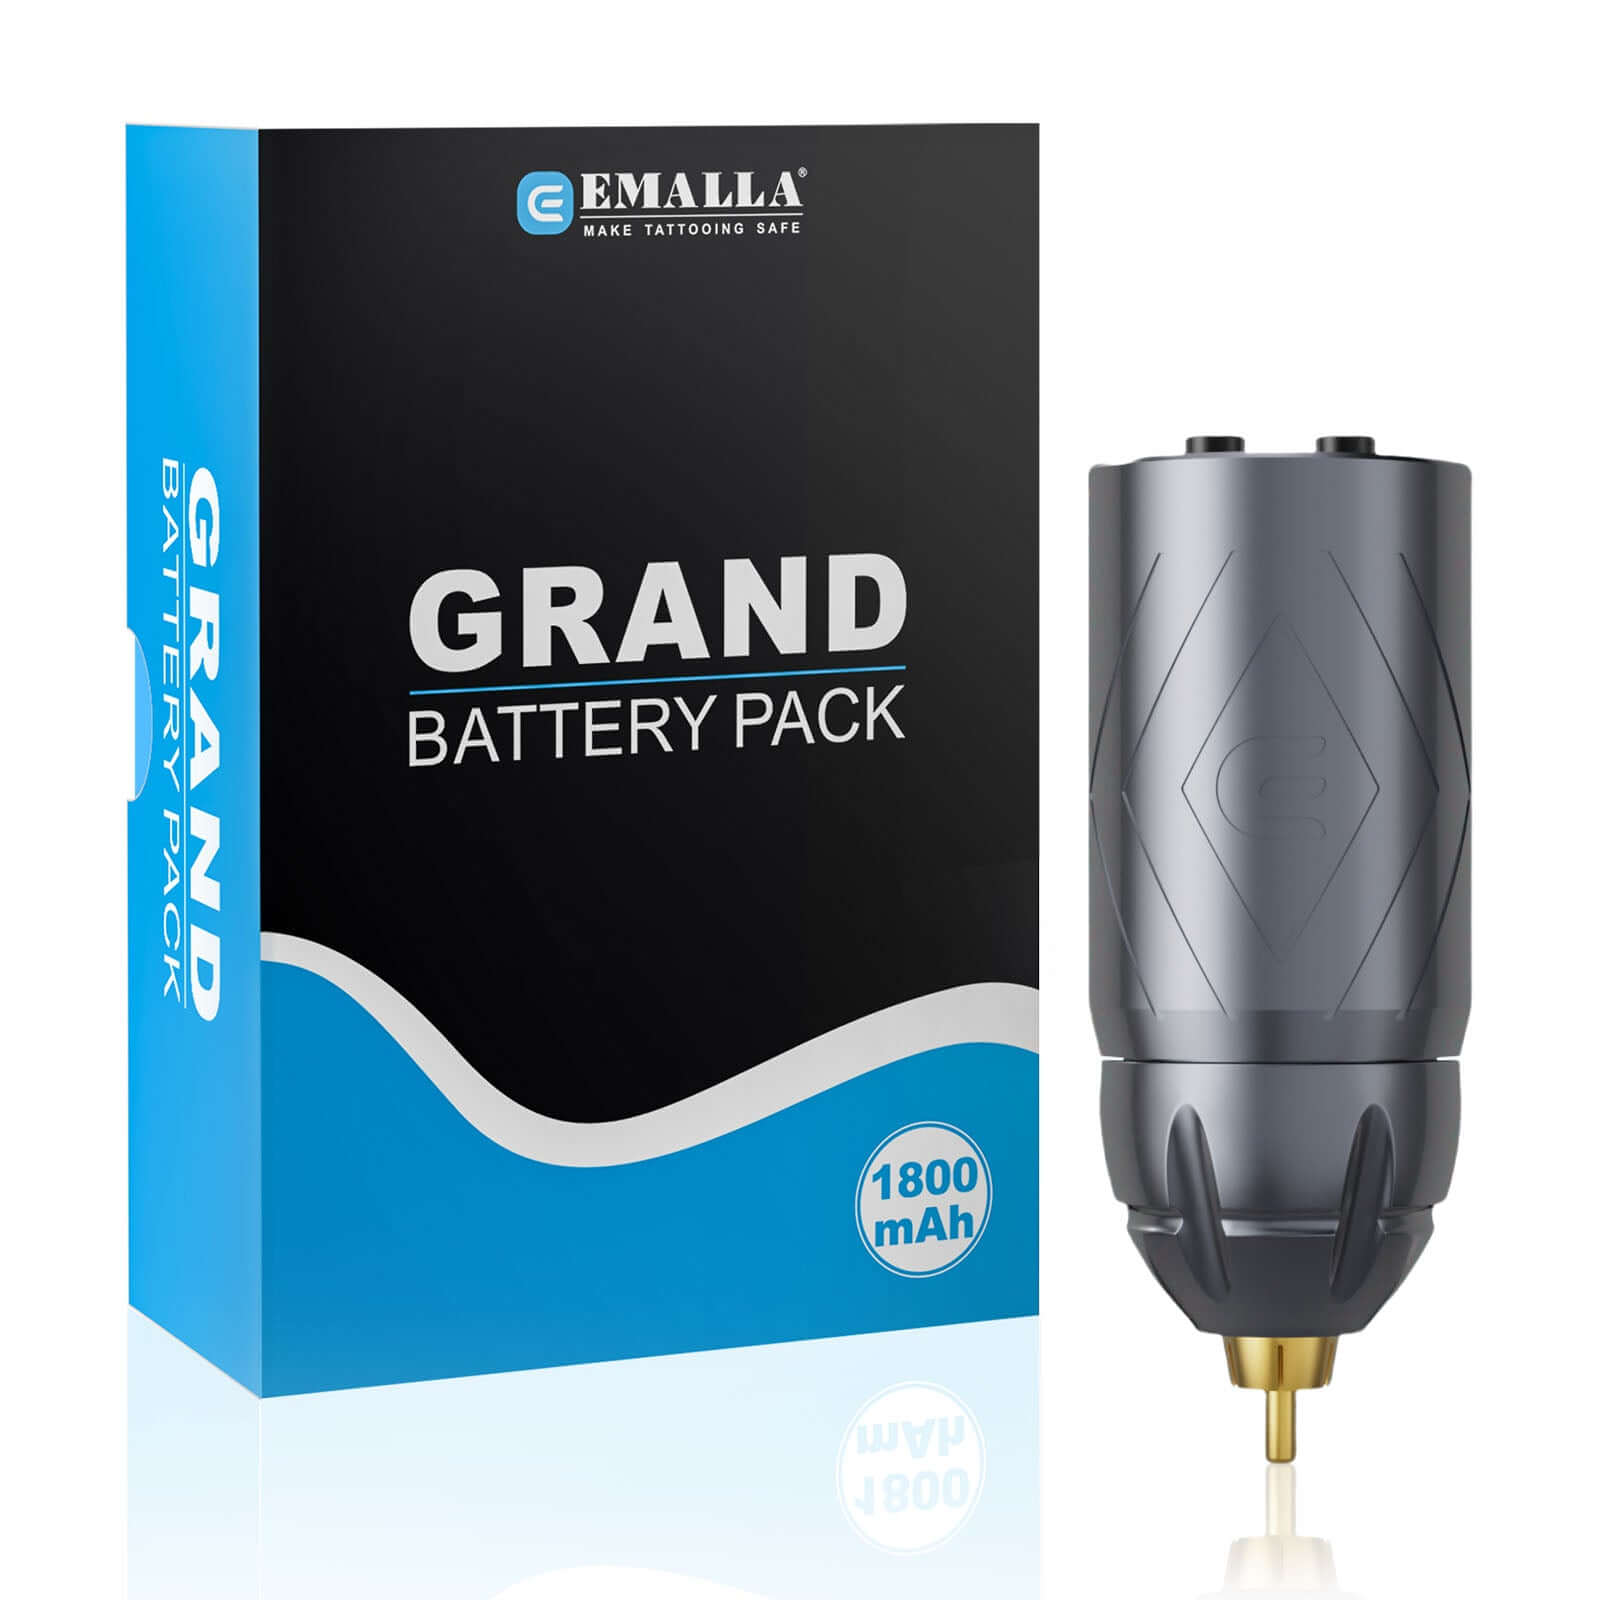 EMALLA GRAND Wireless Tattoo Battery Power Supply RCA Connect 1800mAh (Grey)